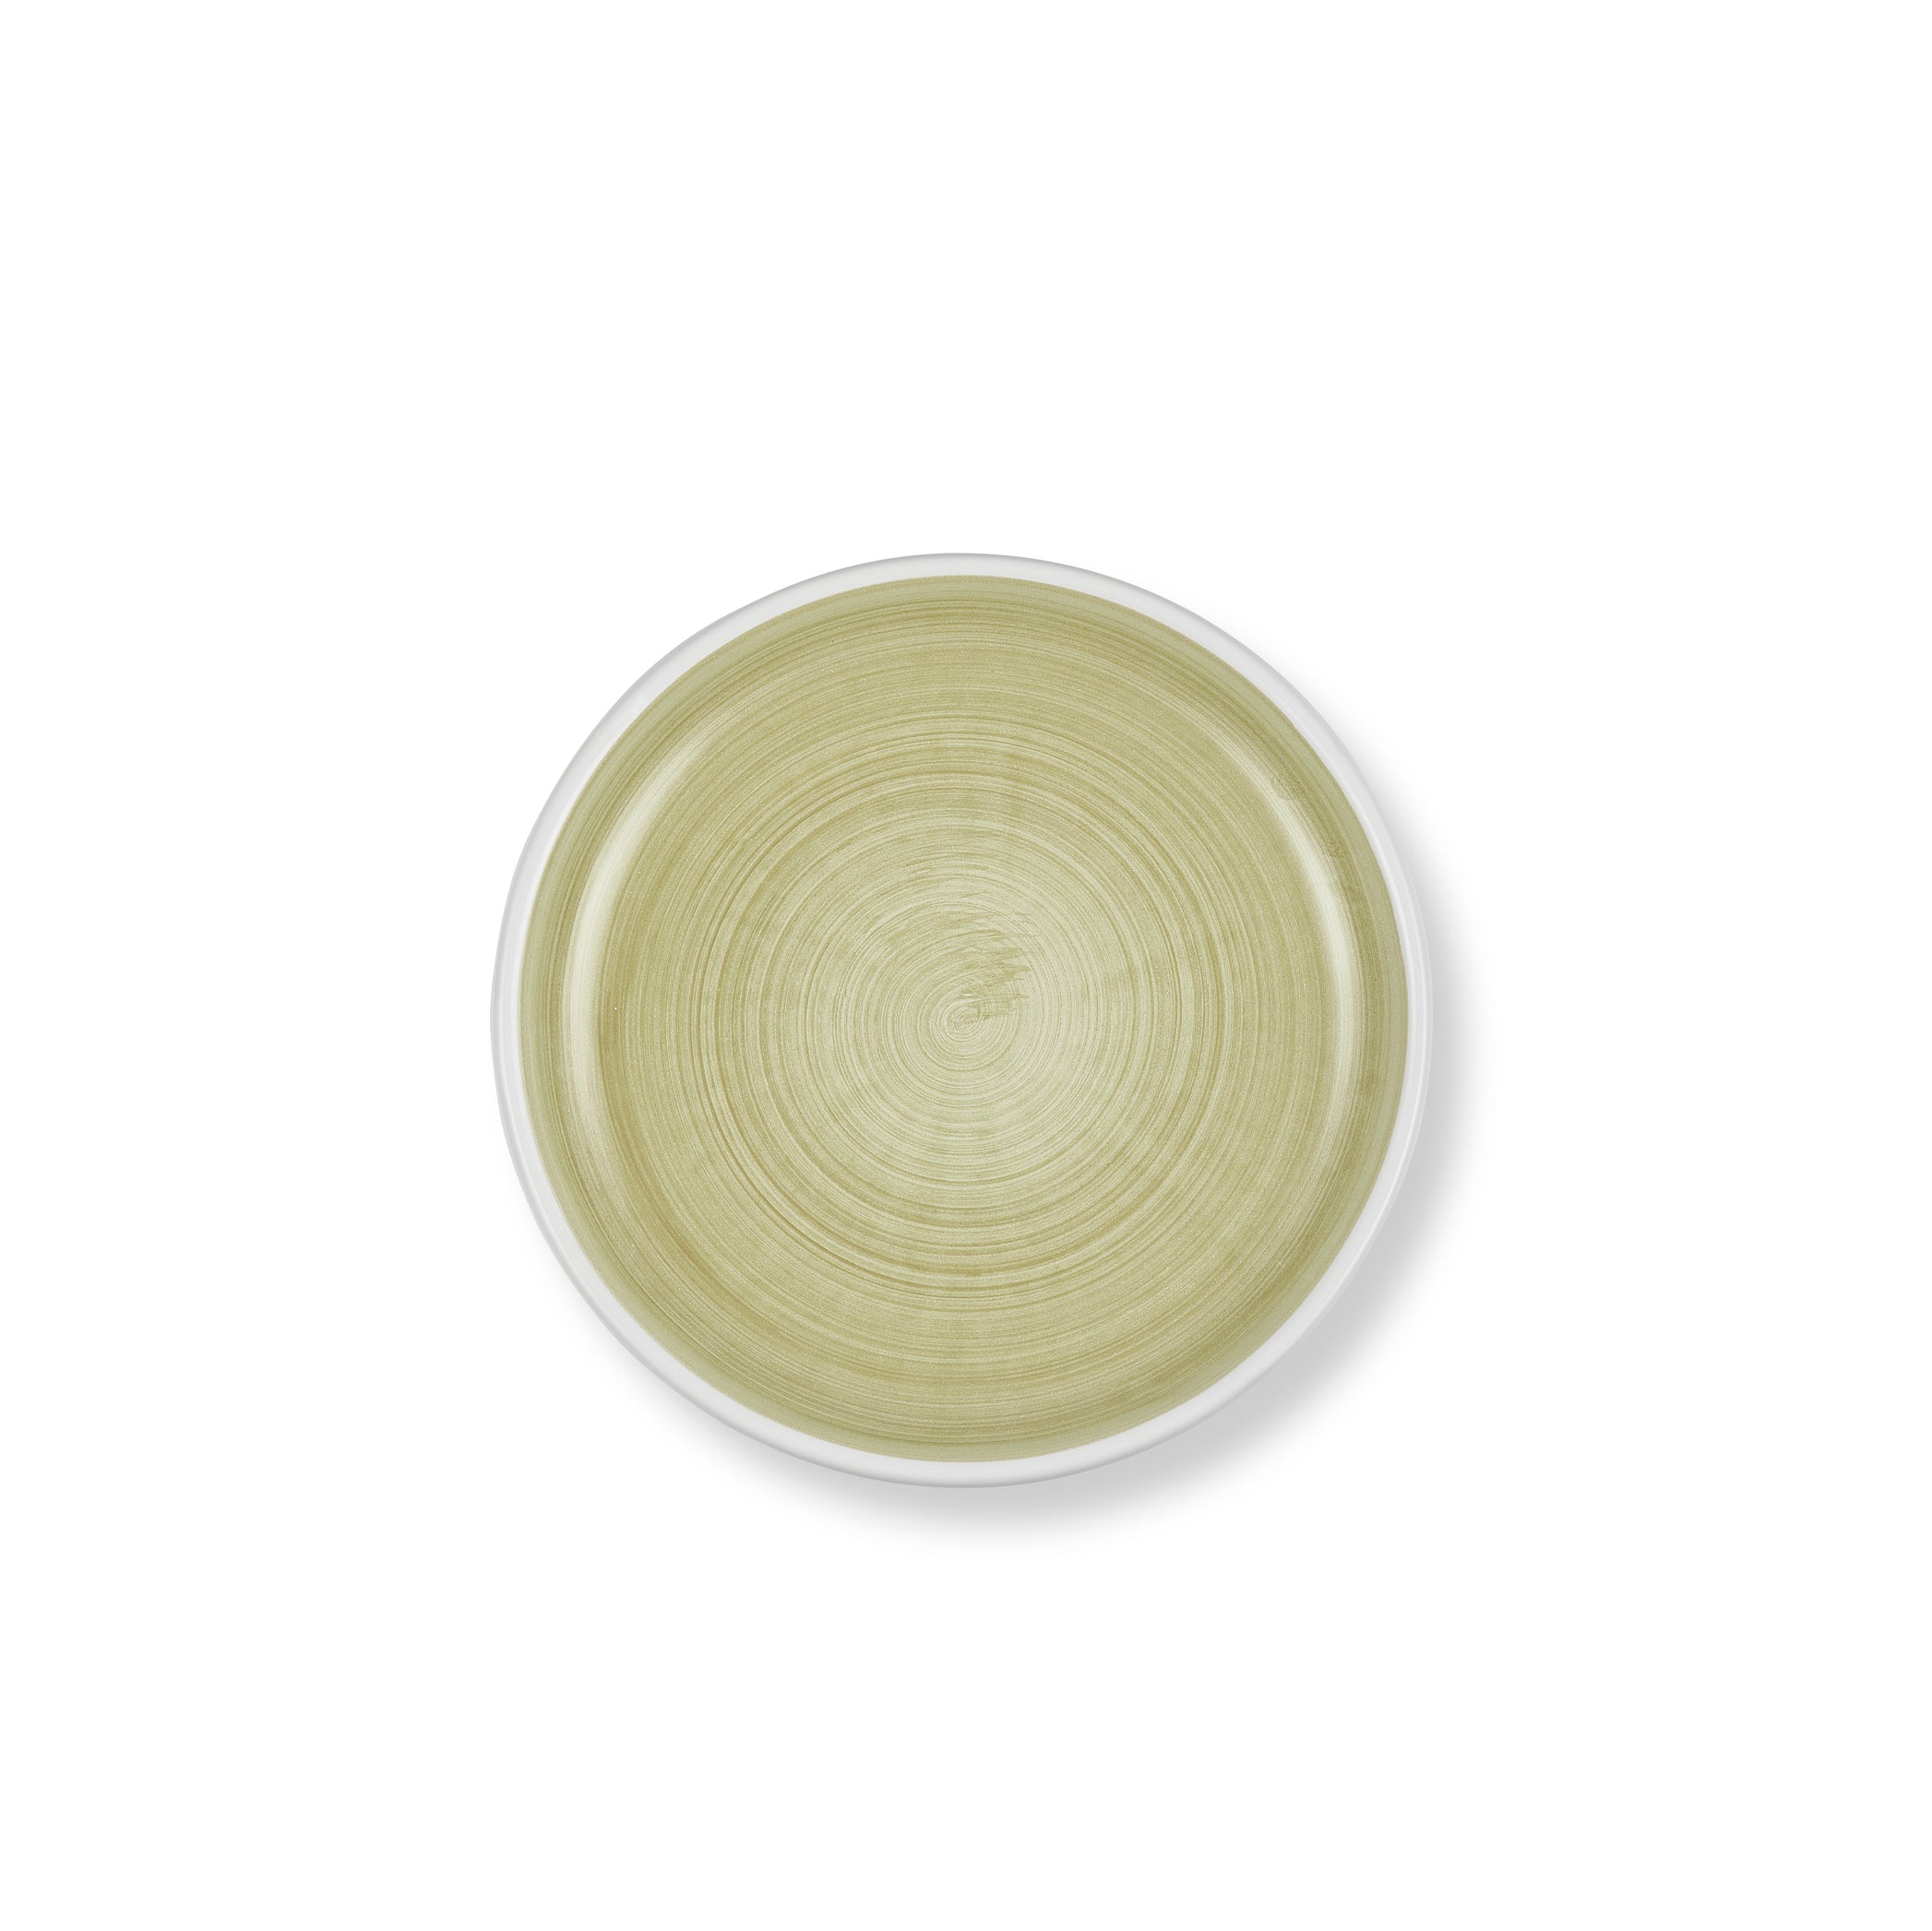 S&B 'Brushed' Ceramic Side Plate in Season Green, 21cm